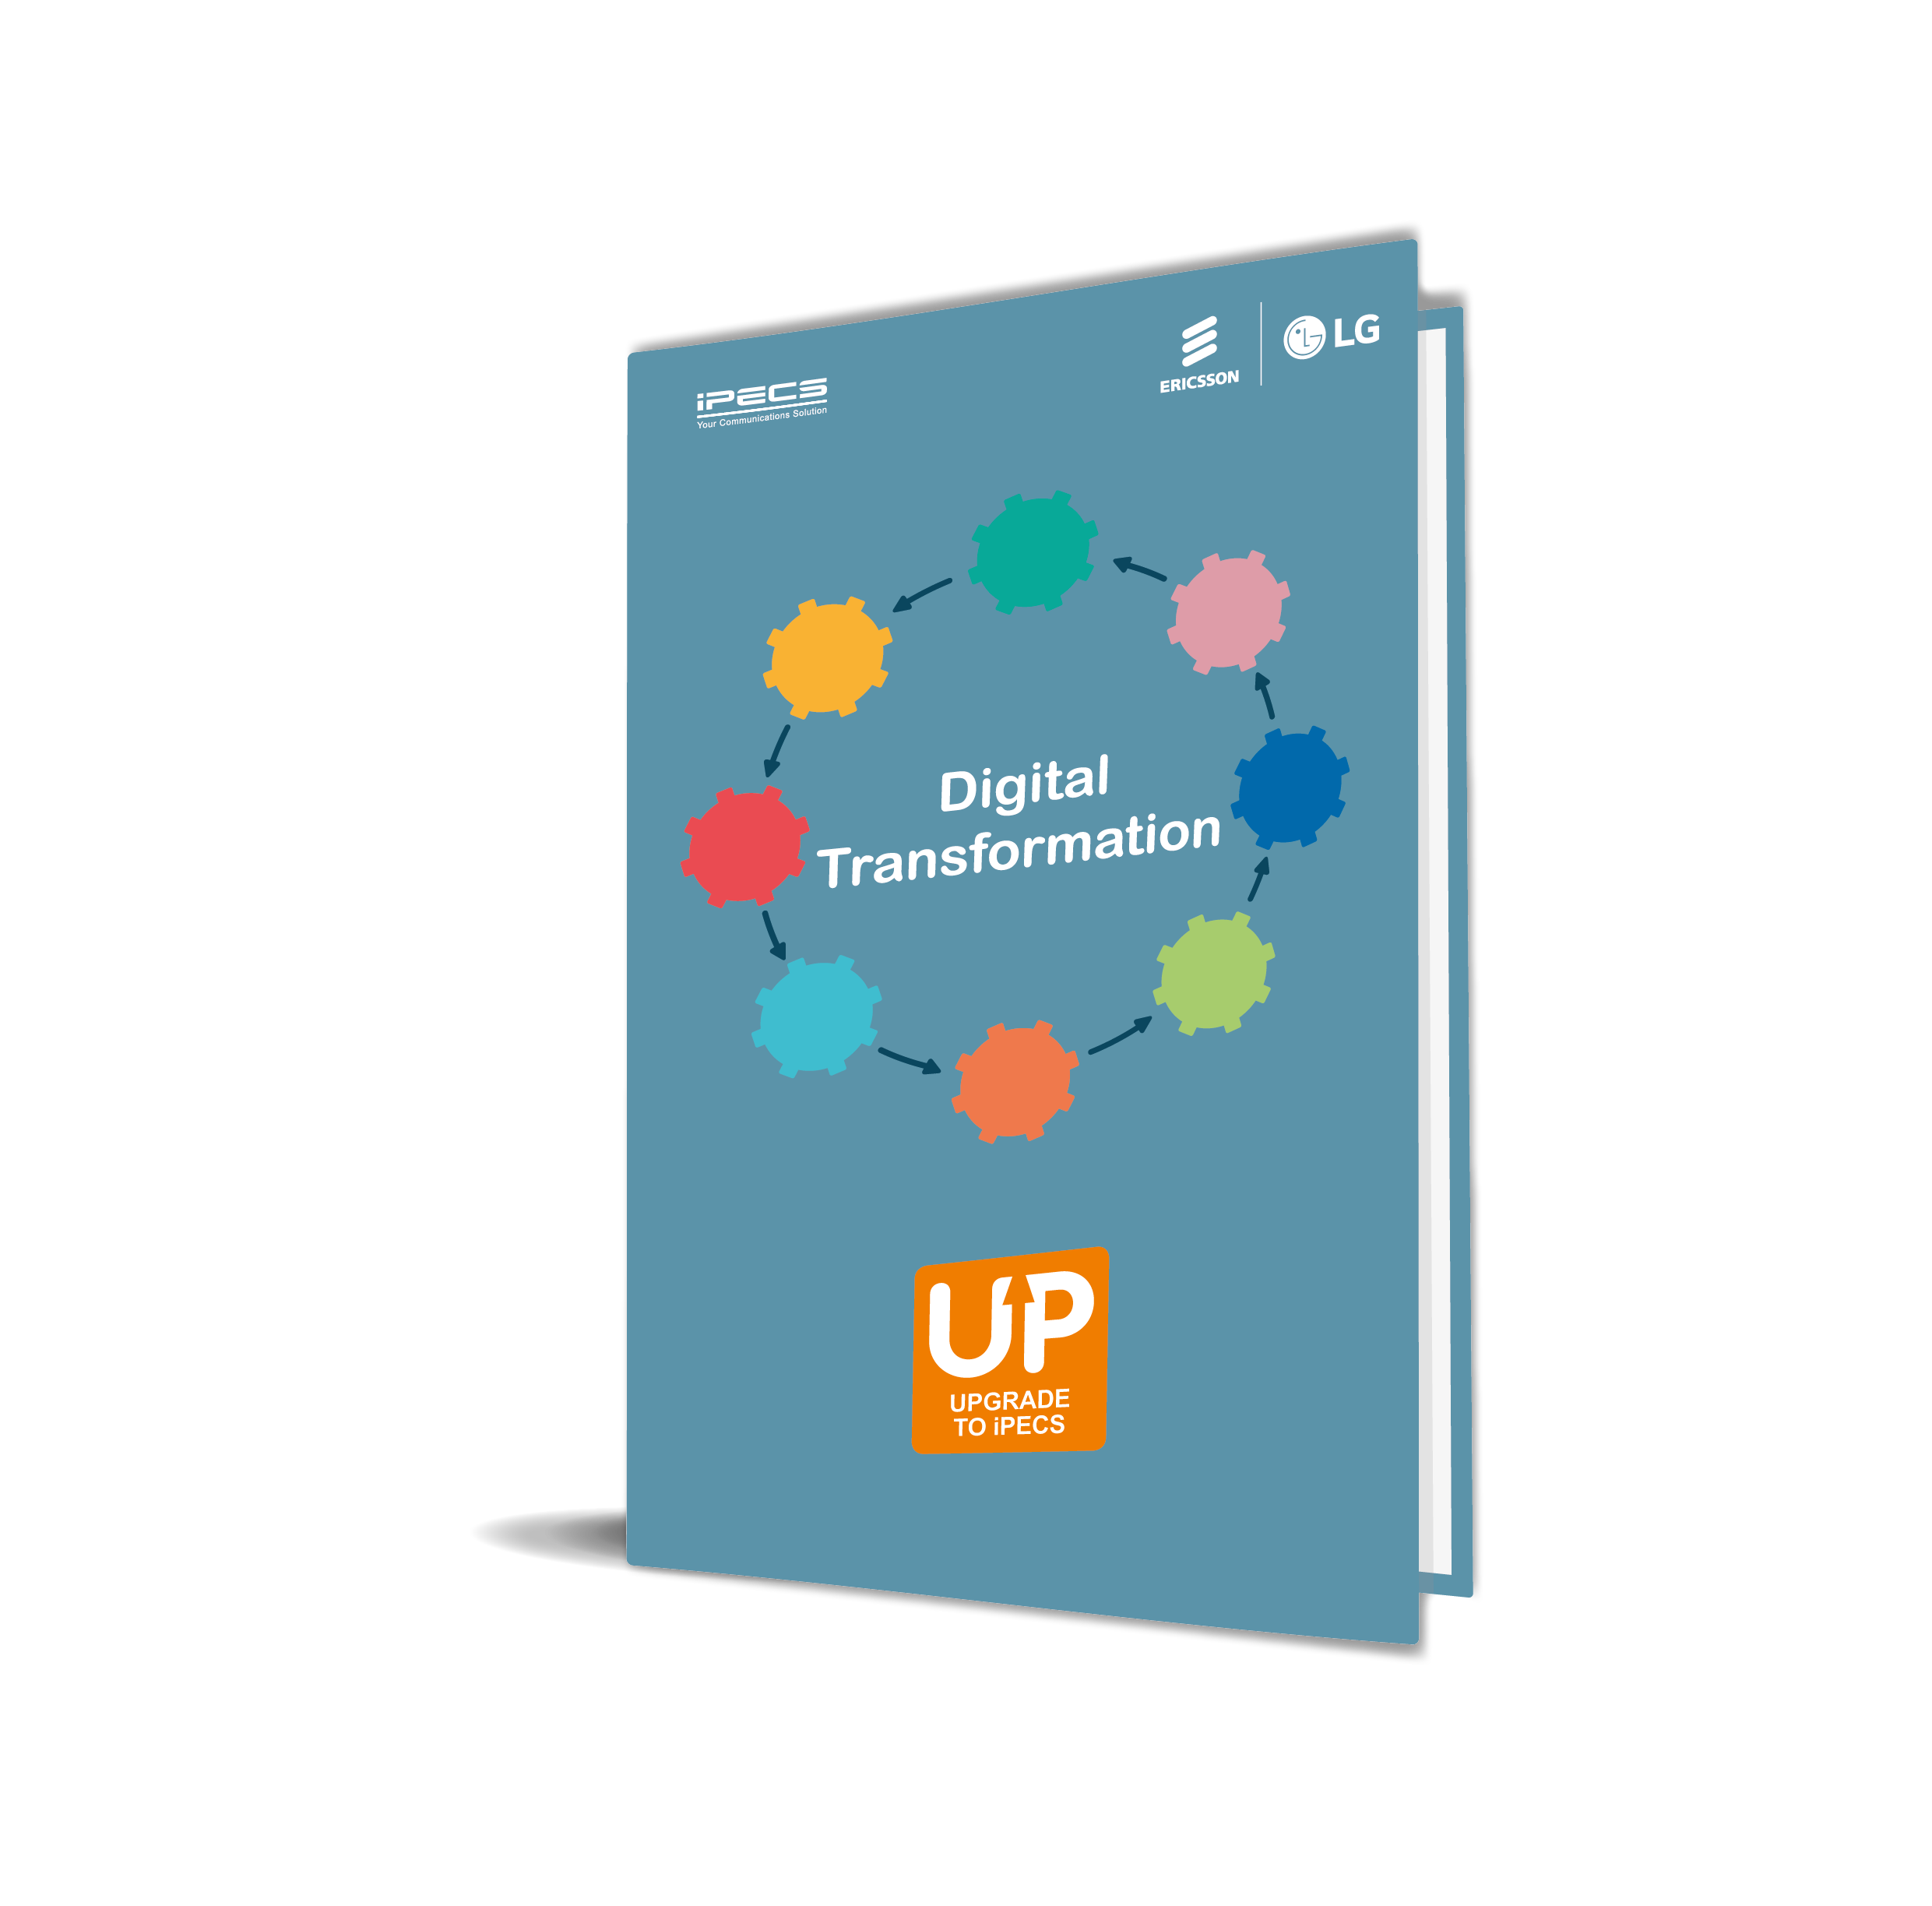 UP Campaign: Digital Transformation